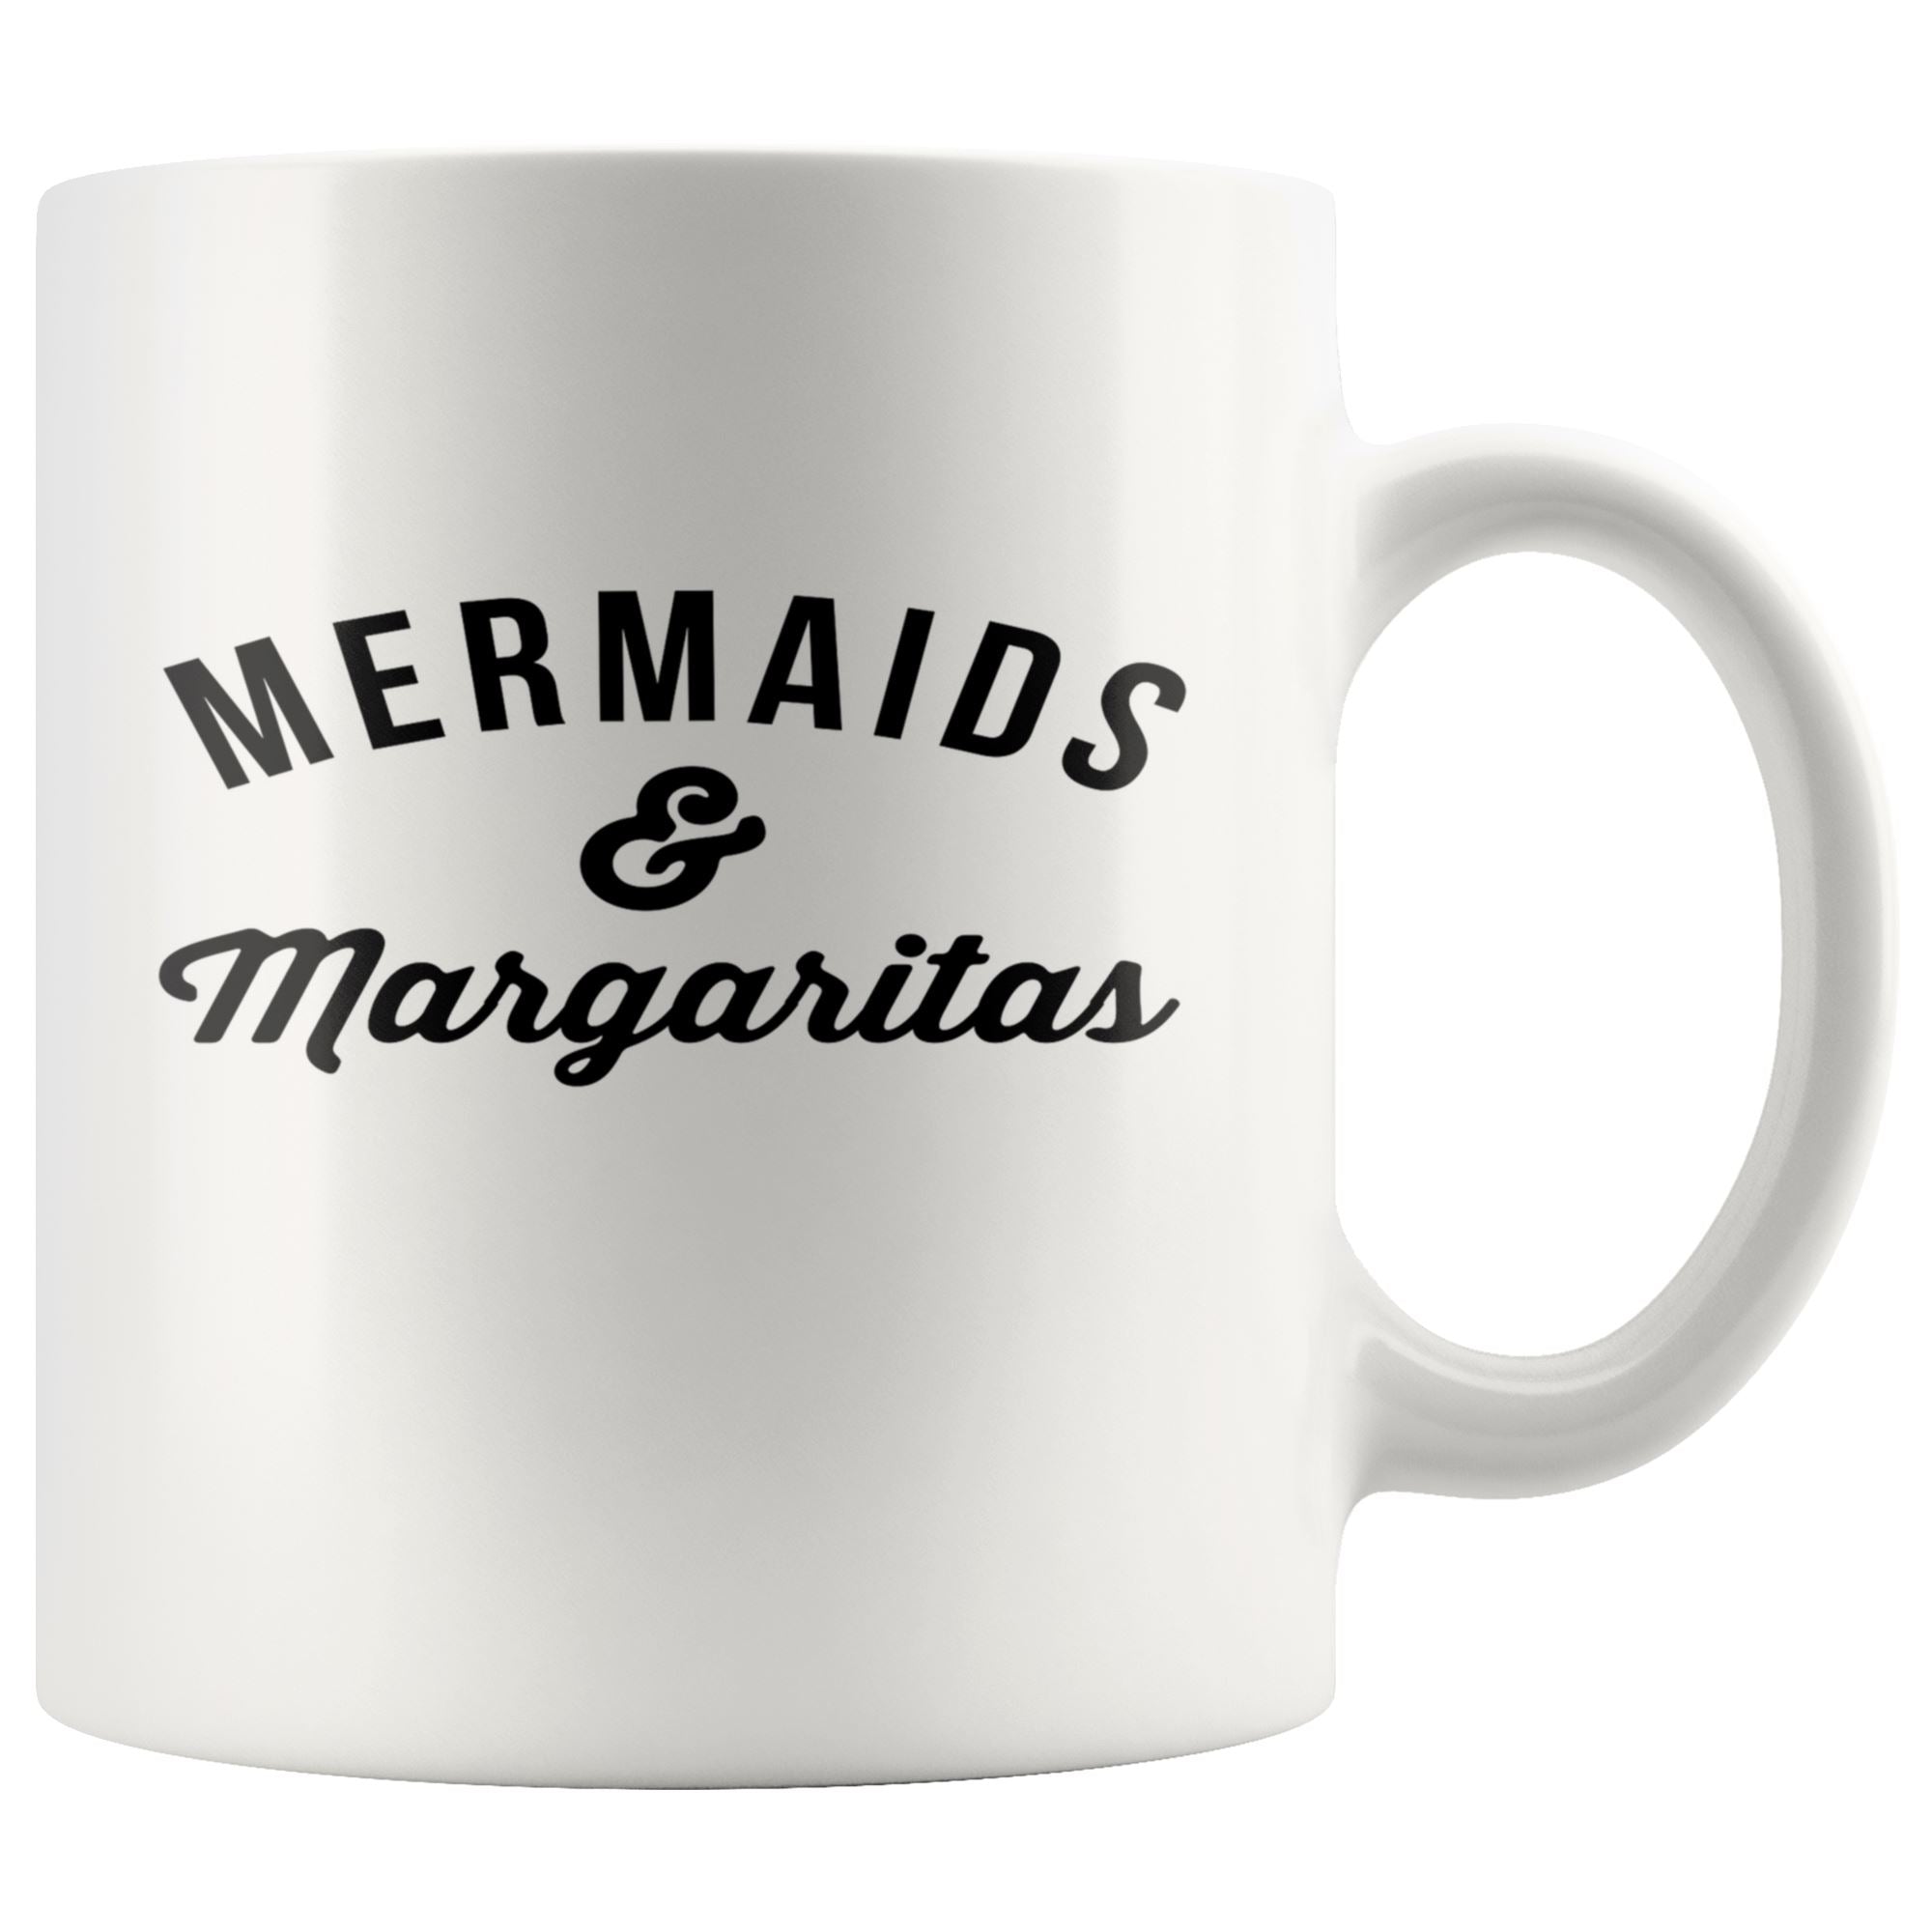 Mermaids and Margaritas Drinkware teelaunch 11oz Mug 